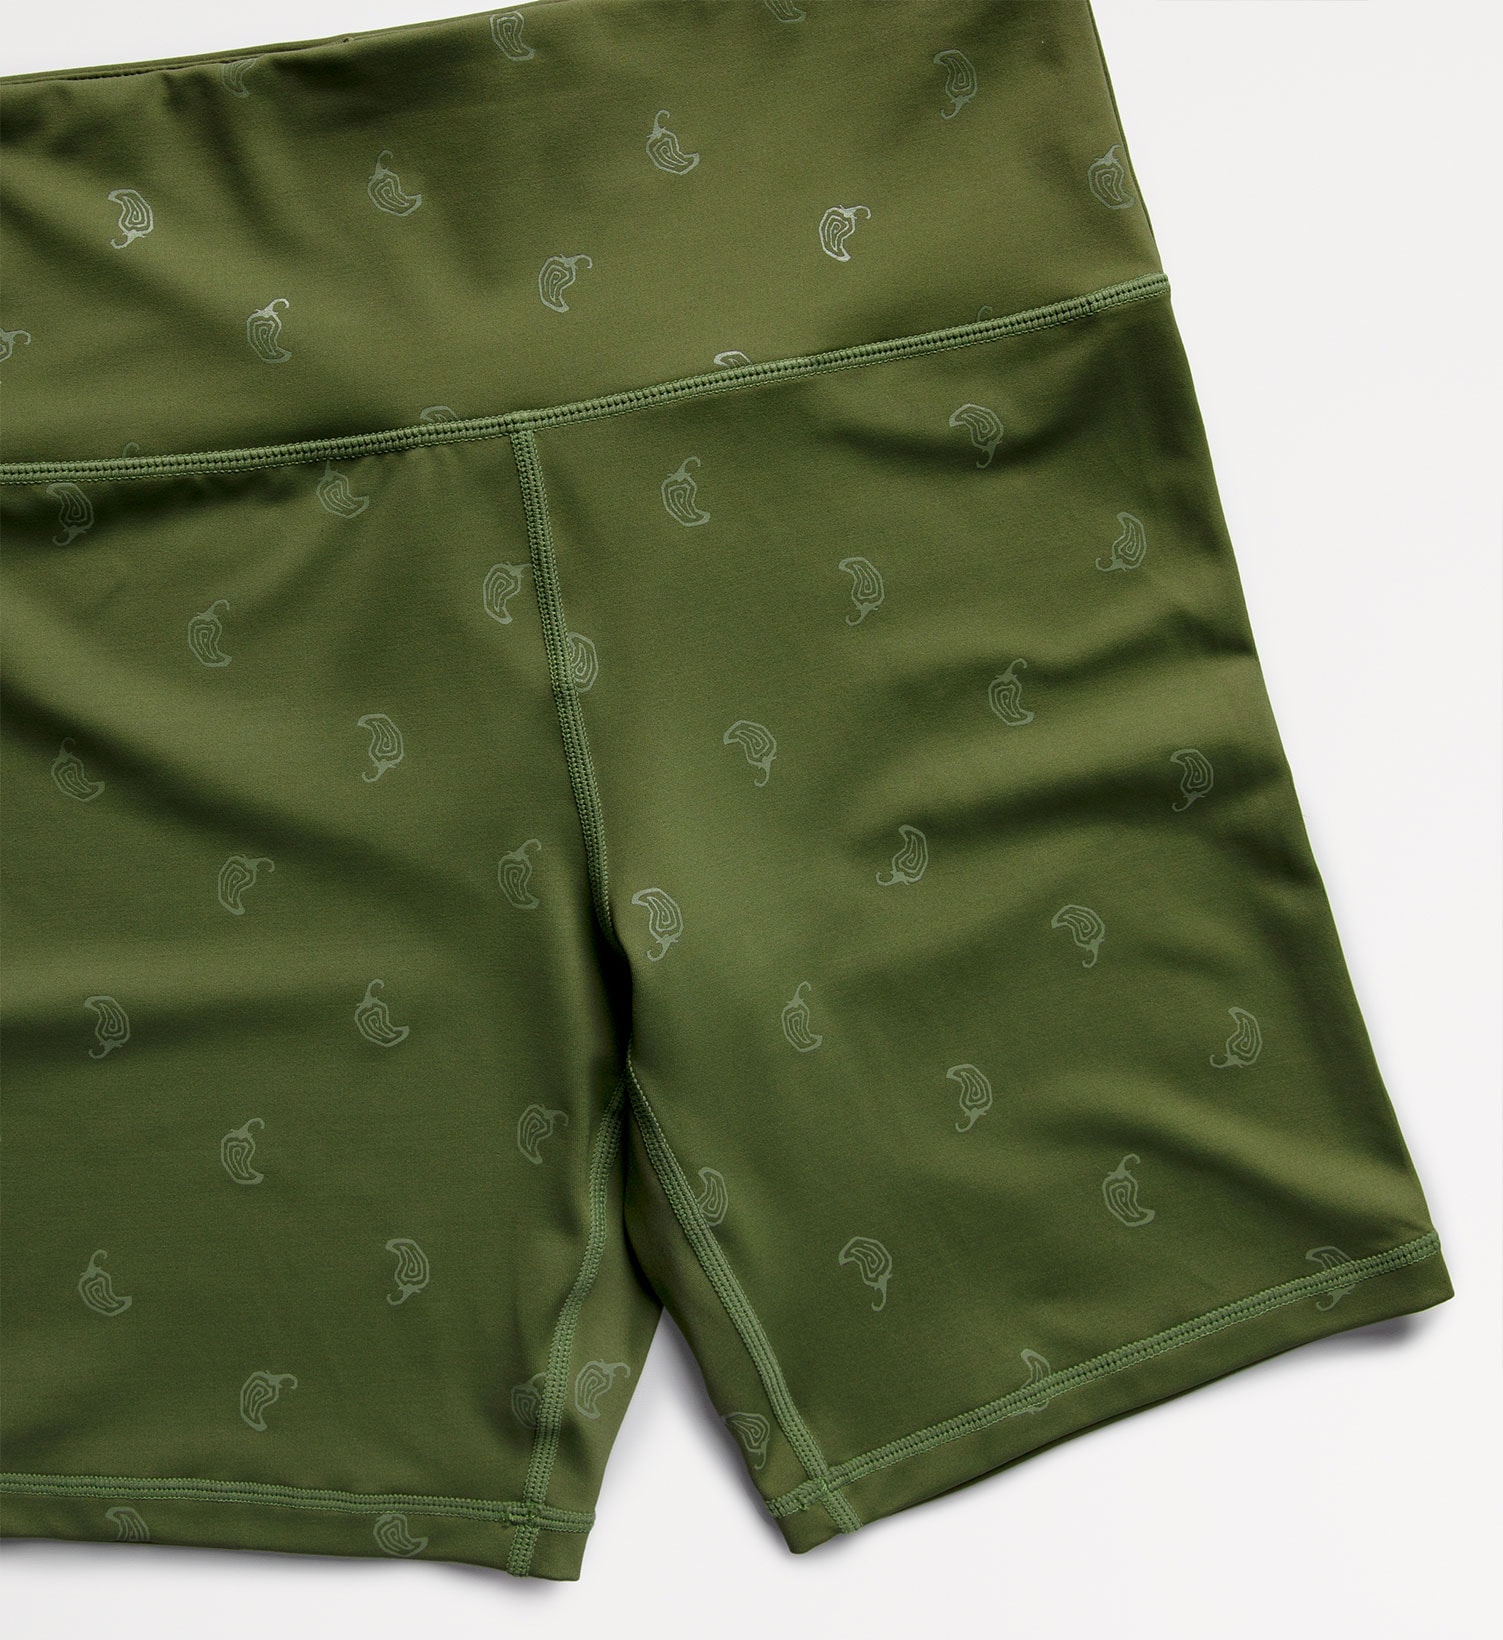 chipotle activewear fitness sustainable khaki green bike shorts